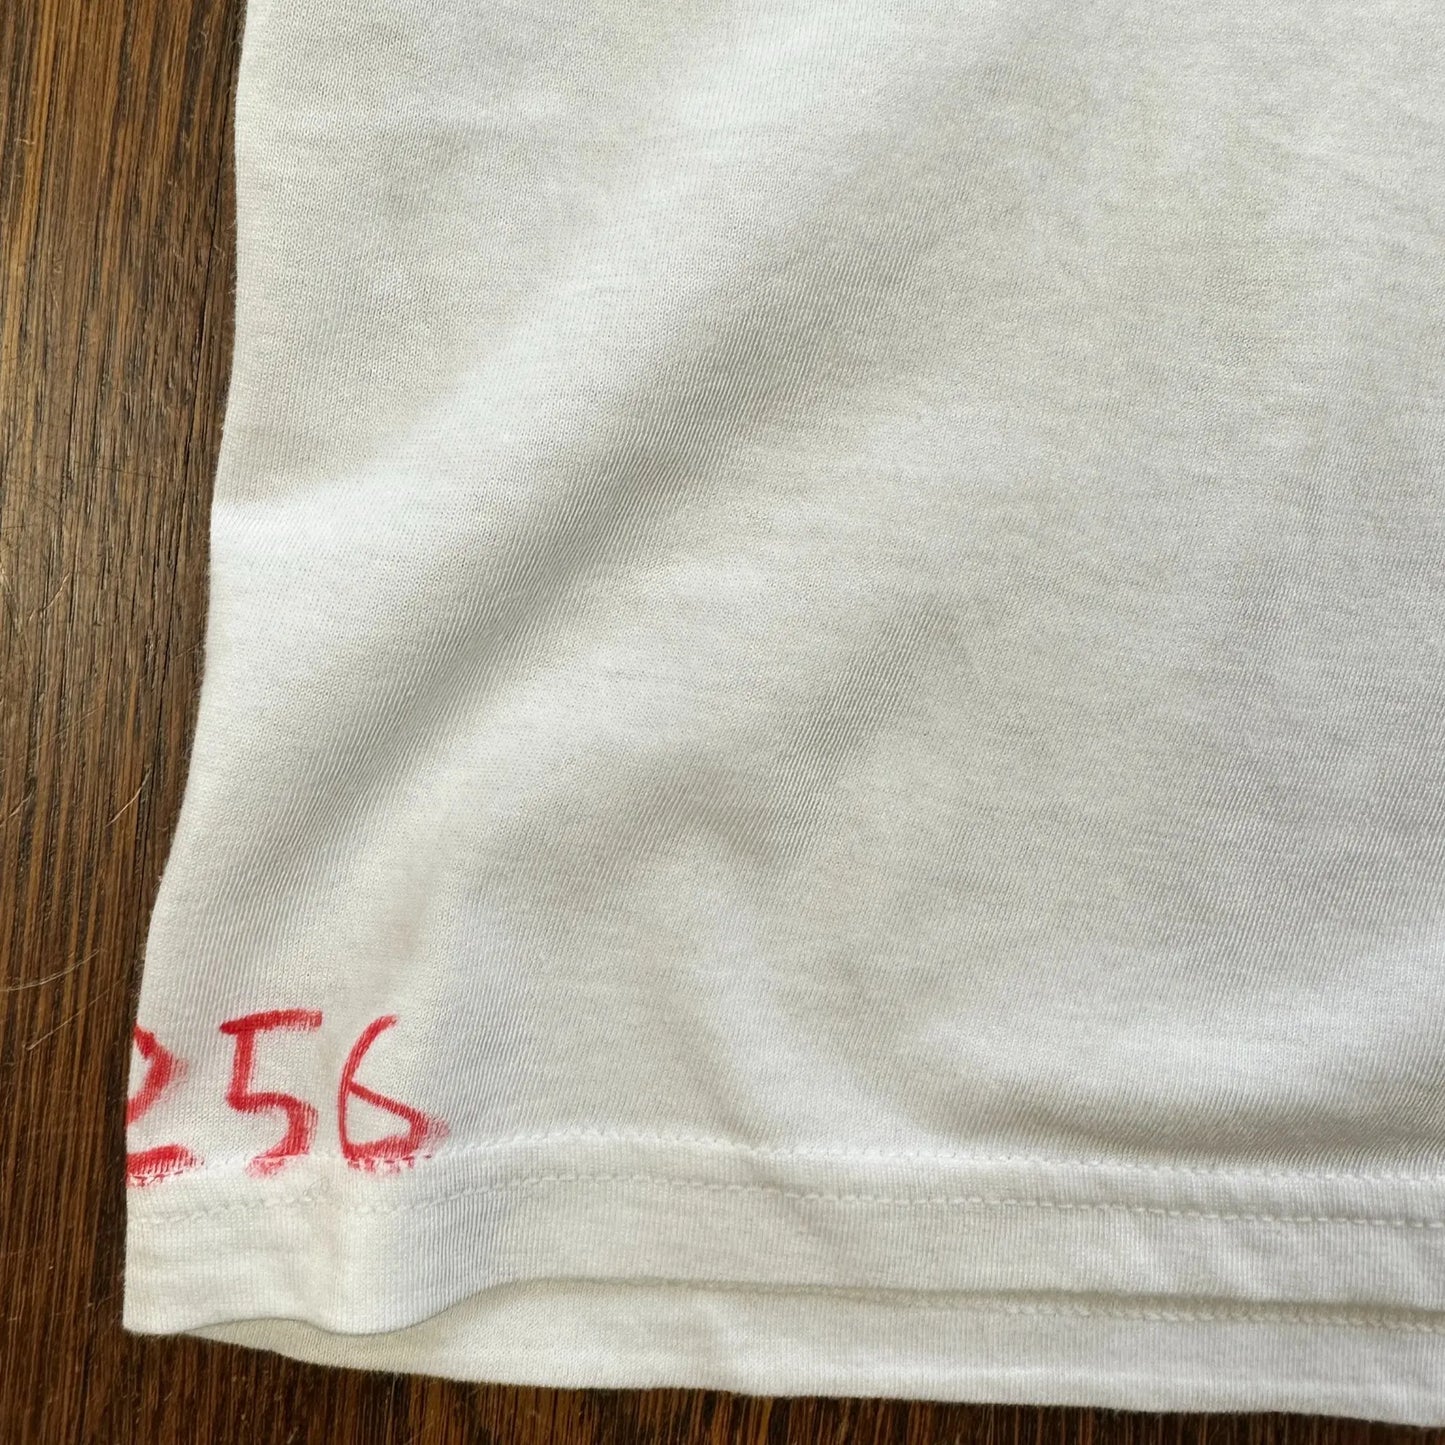 Buy Dylan's T-Shirt Club The G.O.A.T T-Shirt - White | T-Shirtss at Woven Durham